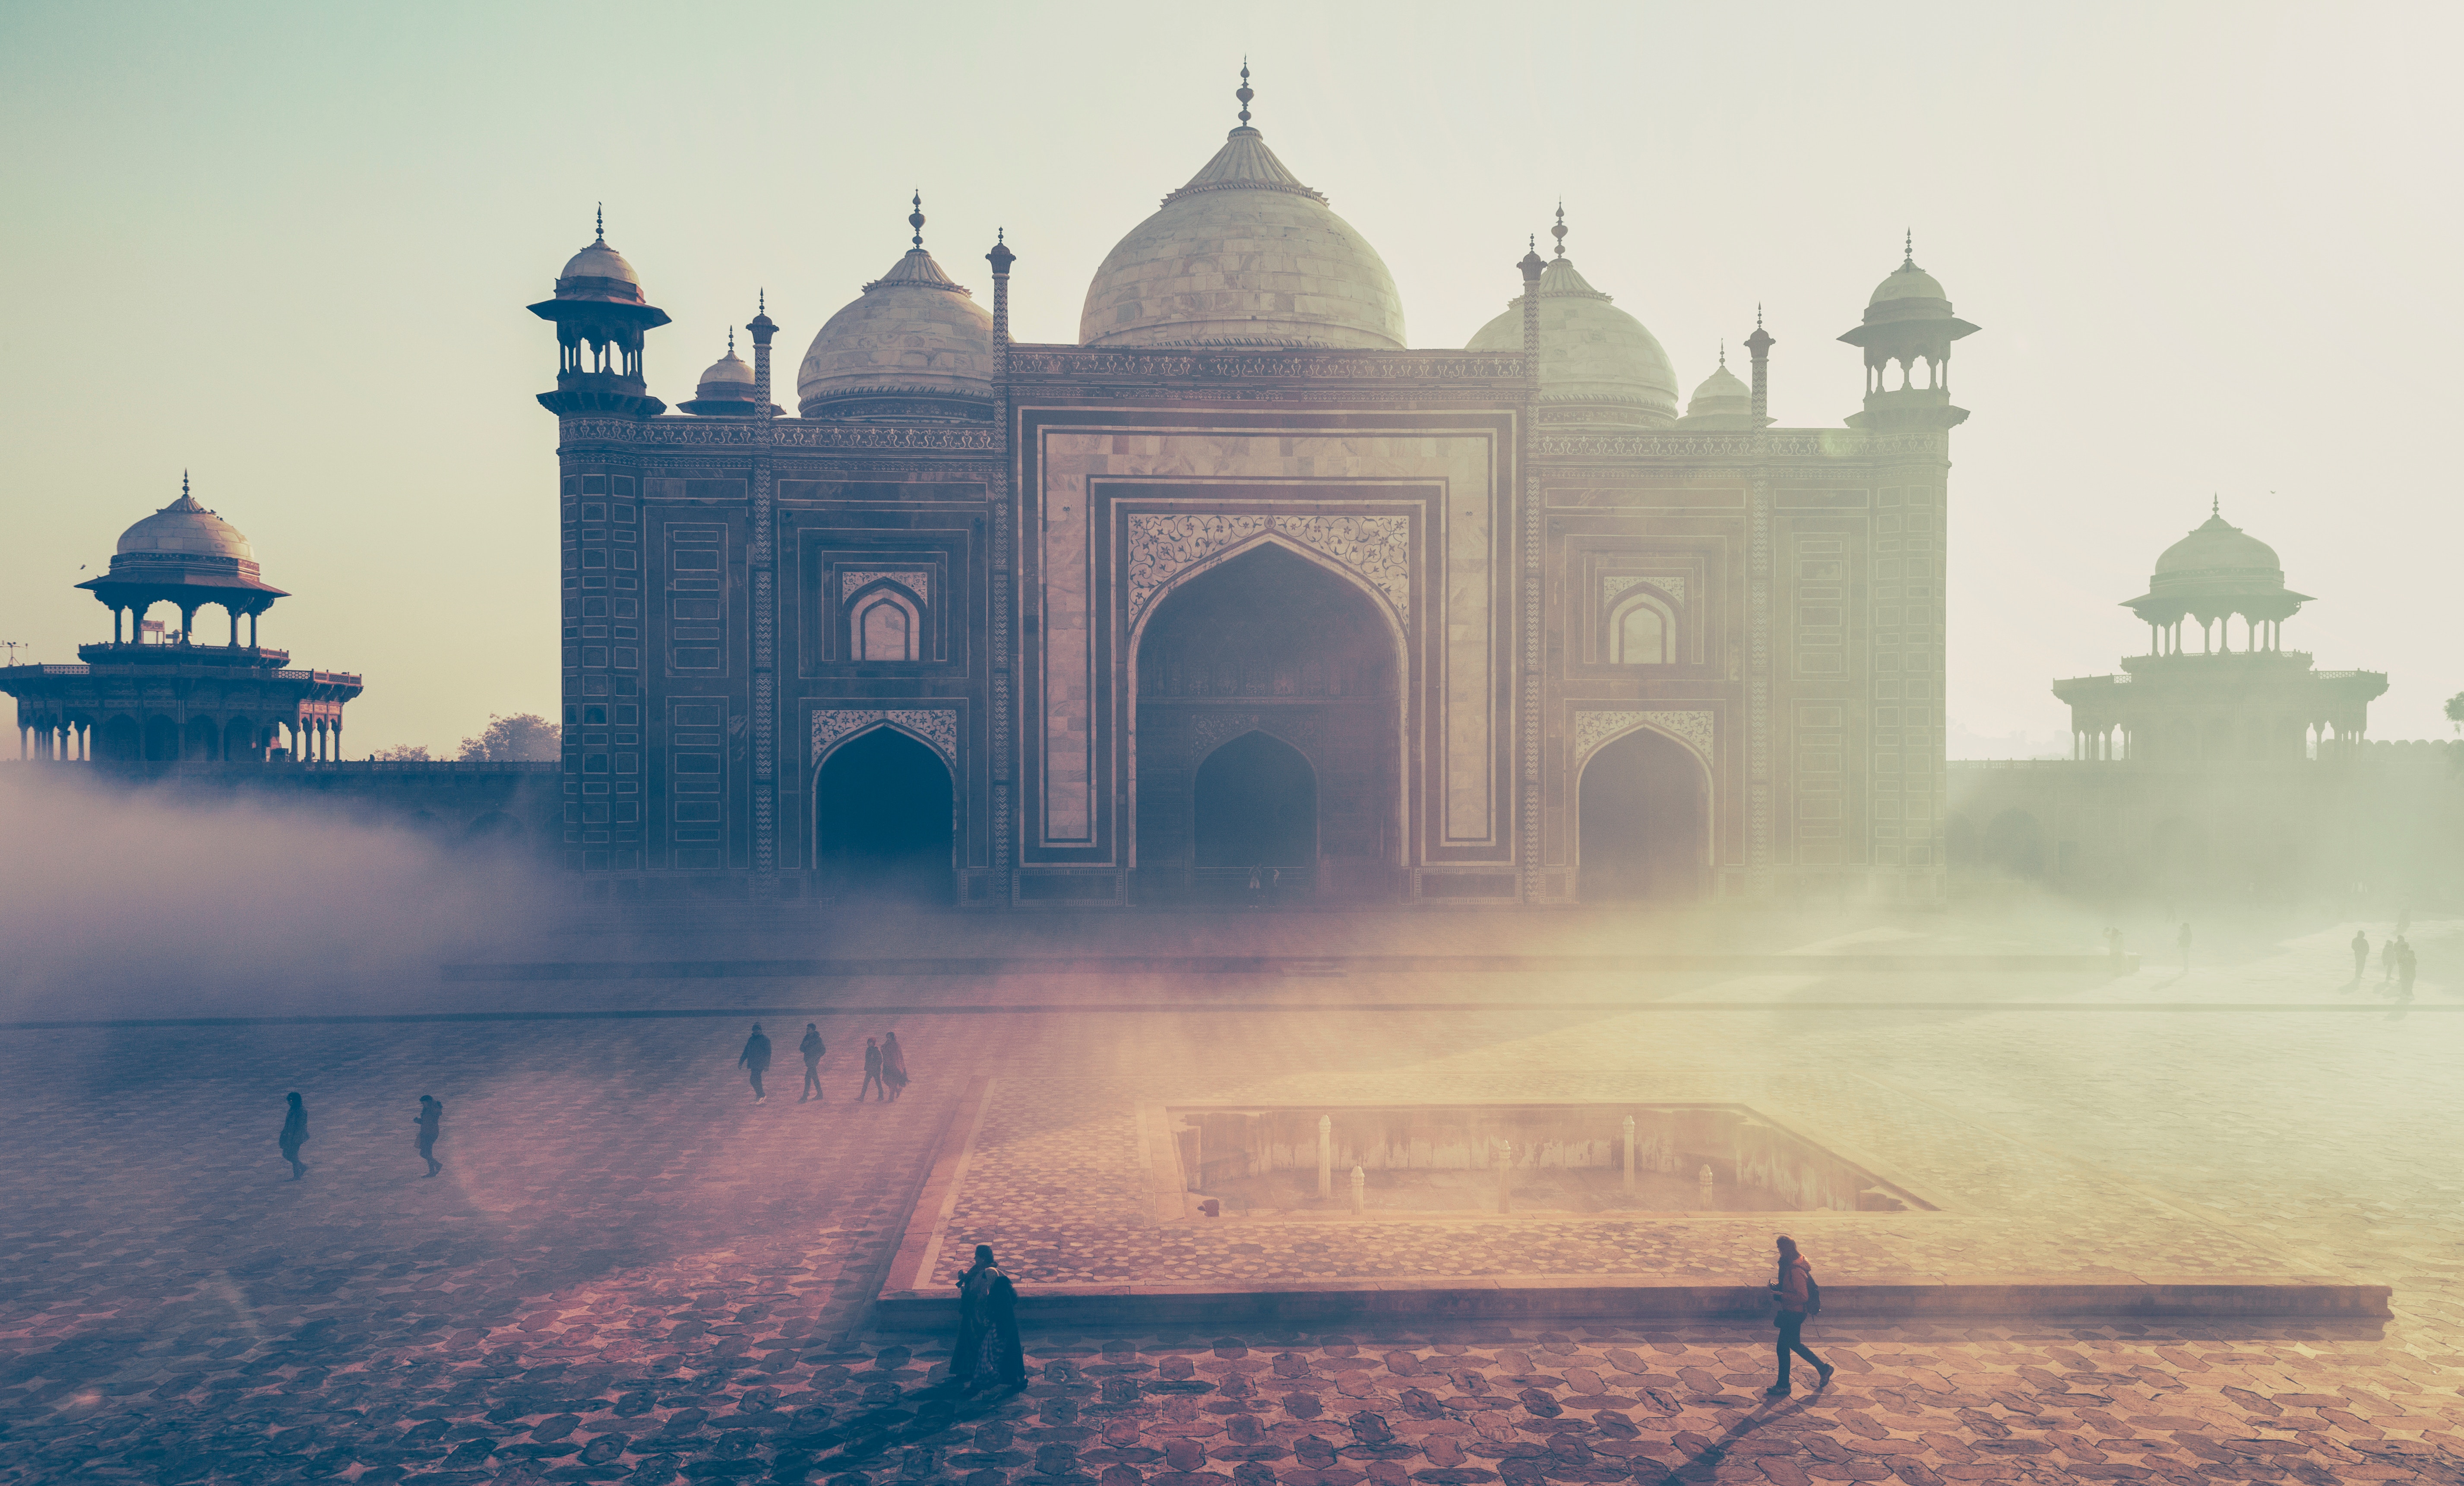 Inde : Le grand tour du Rajasthan avec Varanasi